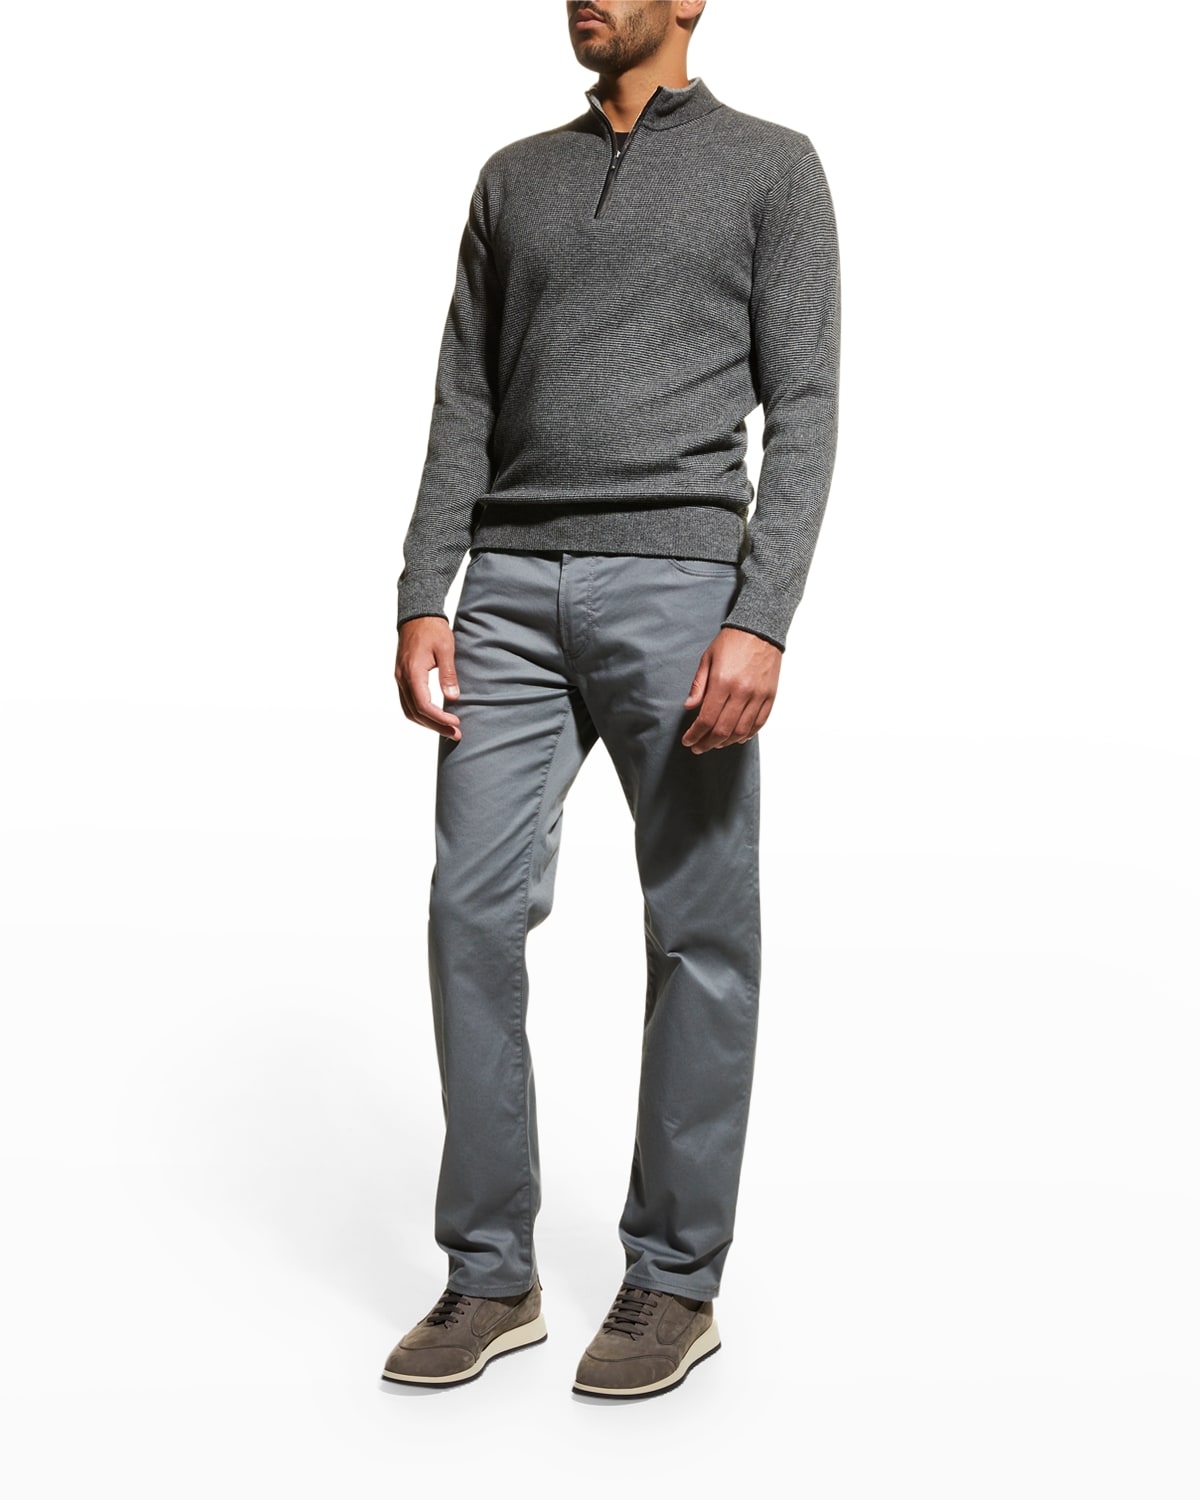 Peter Millar Men's Wool-Cashmere Quarter Zip Sweater